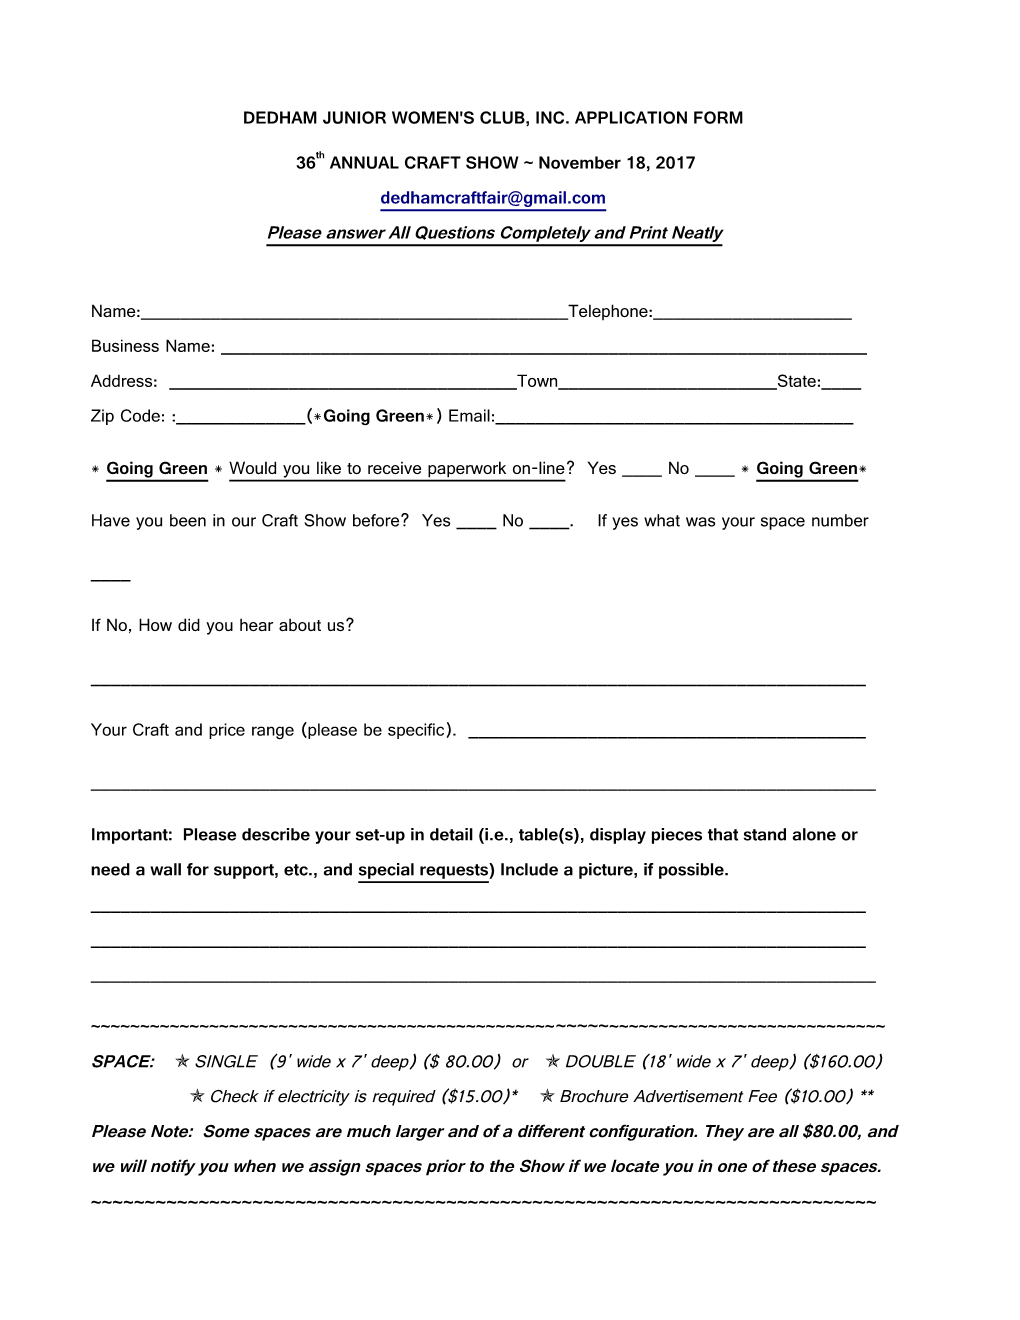 Dedham Junior Women's Club, Inc. Application Form